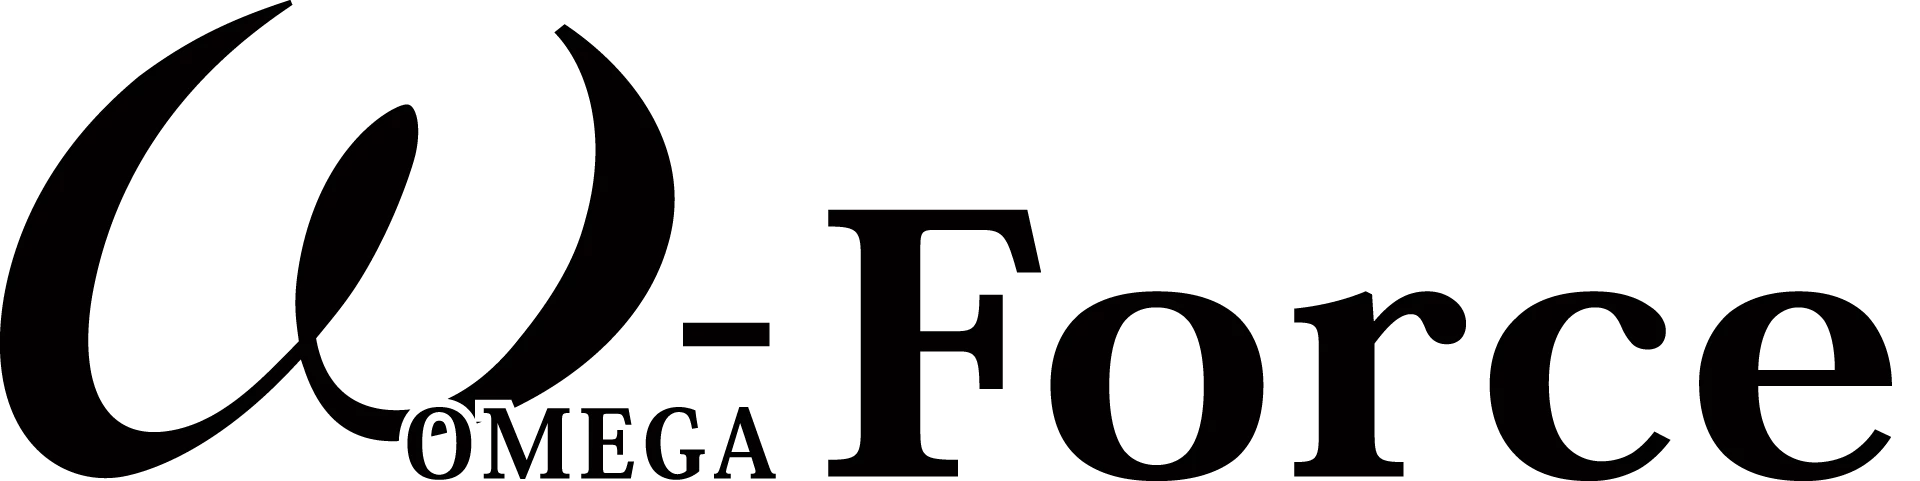 Omega Force developer logo